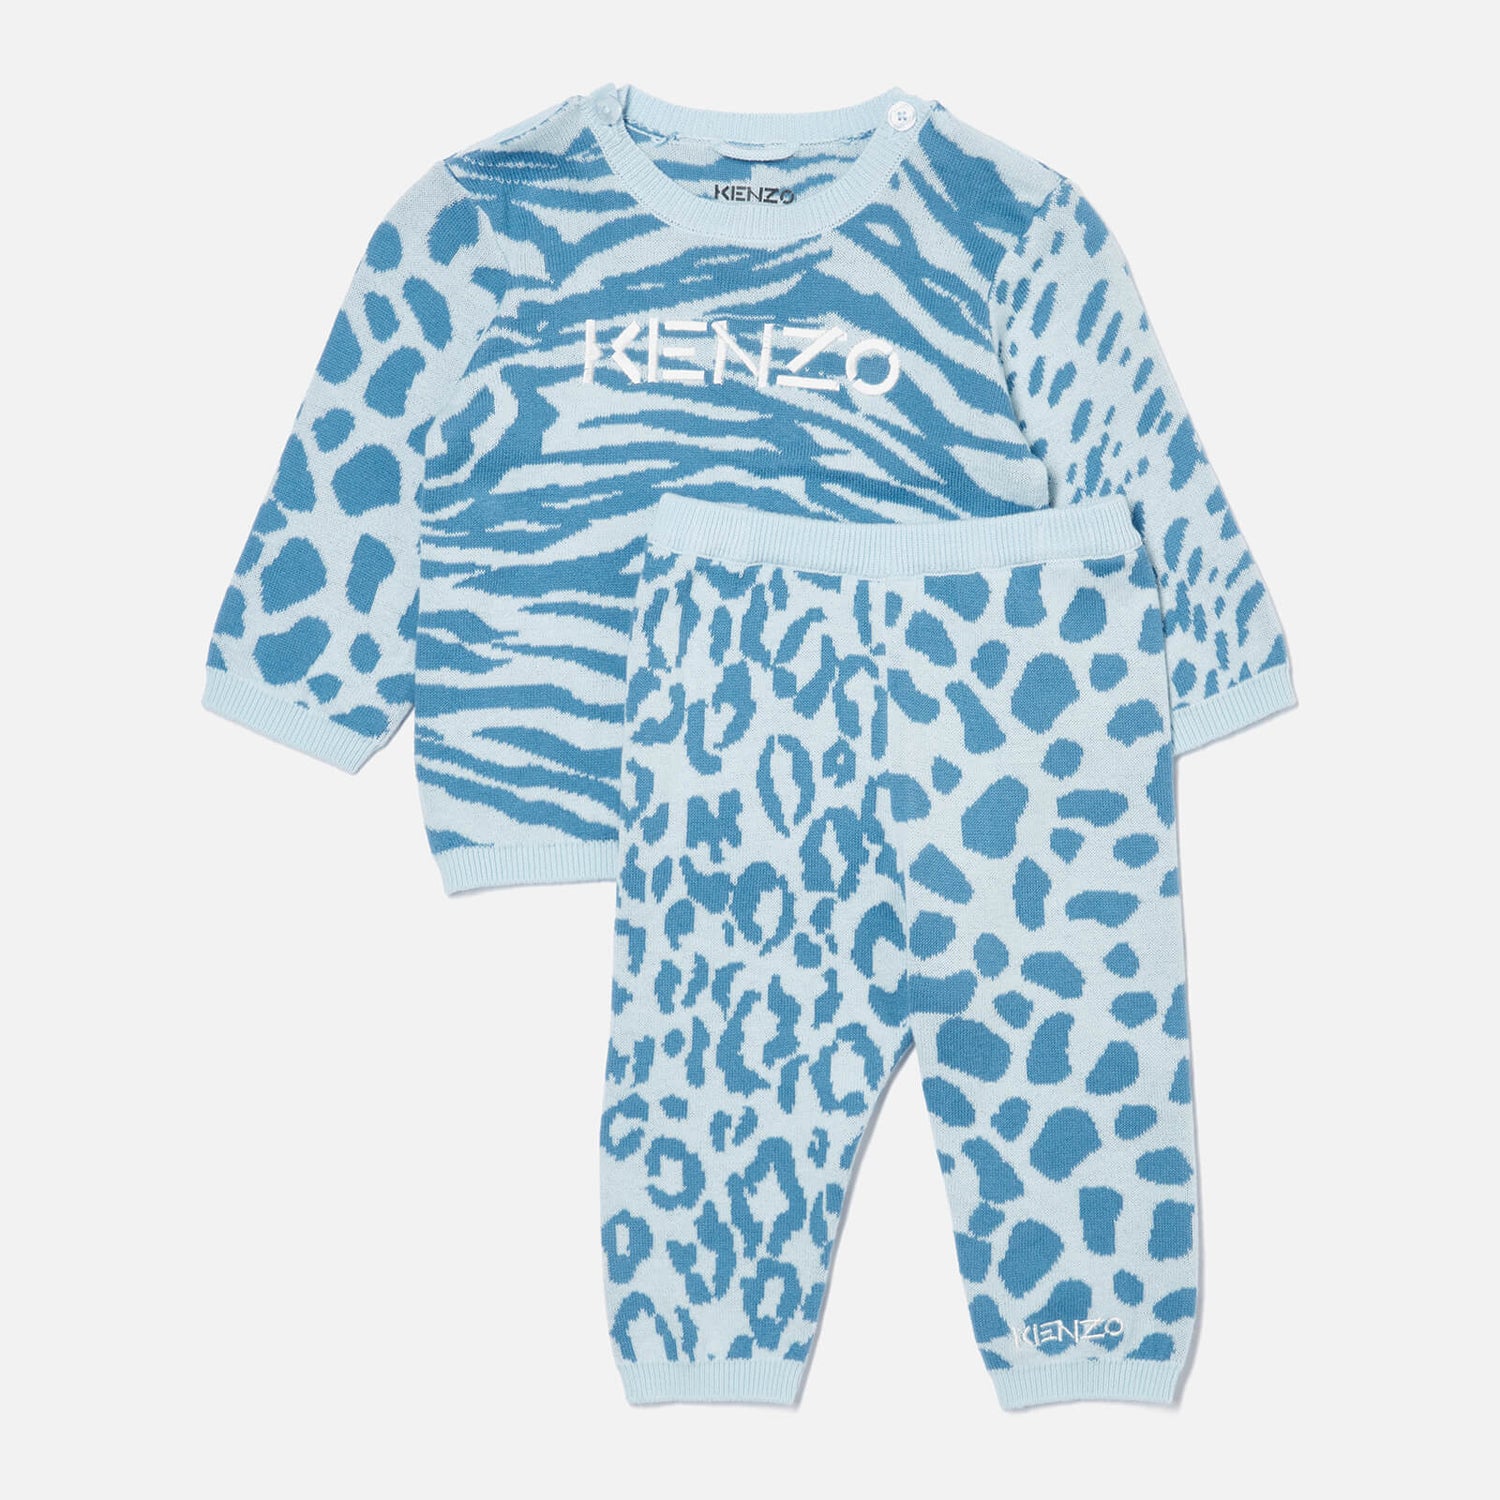 KENZO Newborn Animal Print Matching Set - Pale Blue